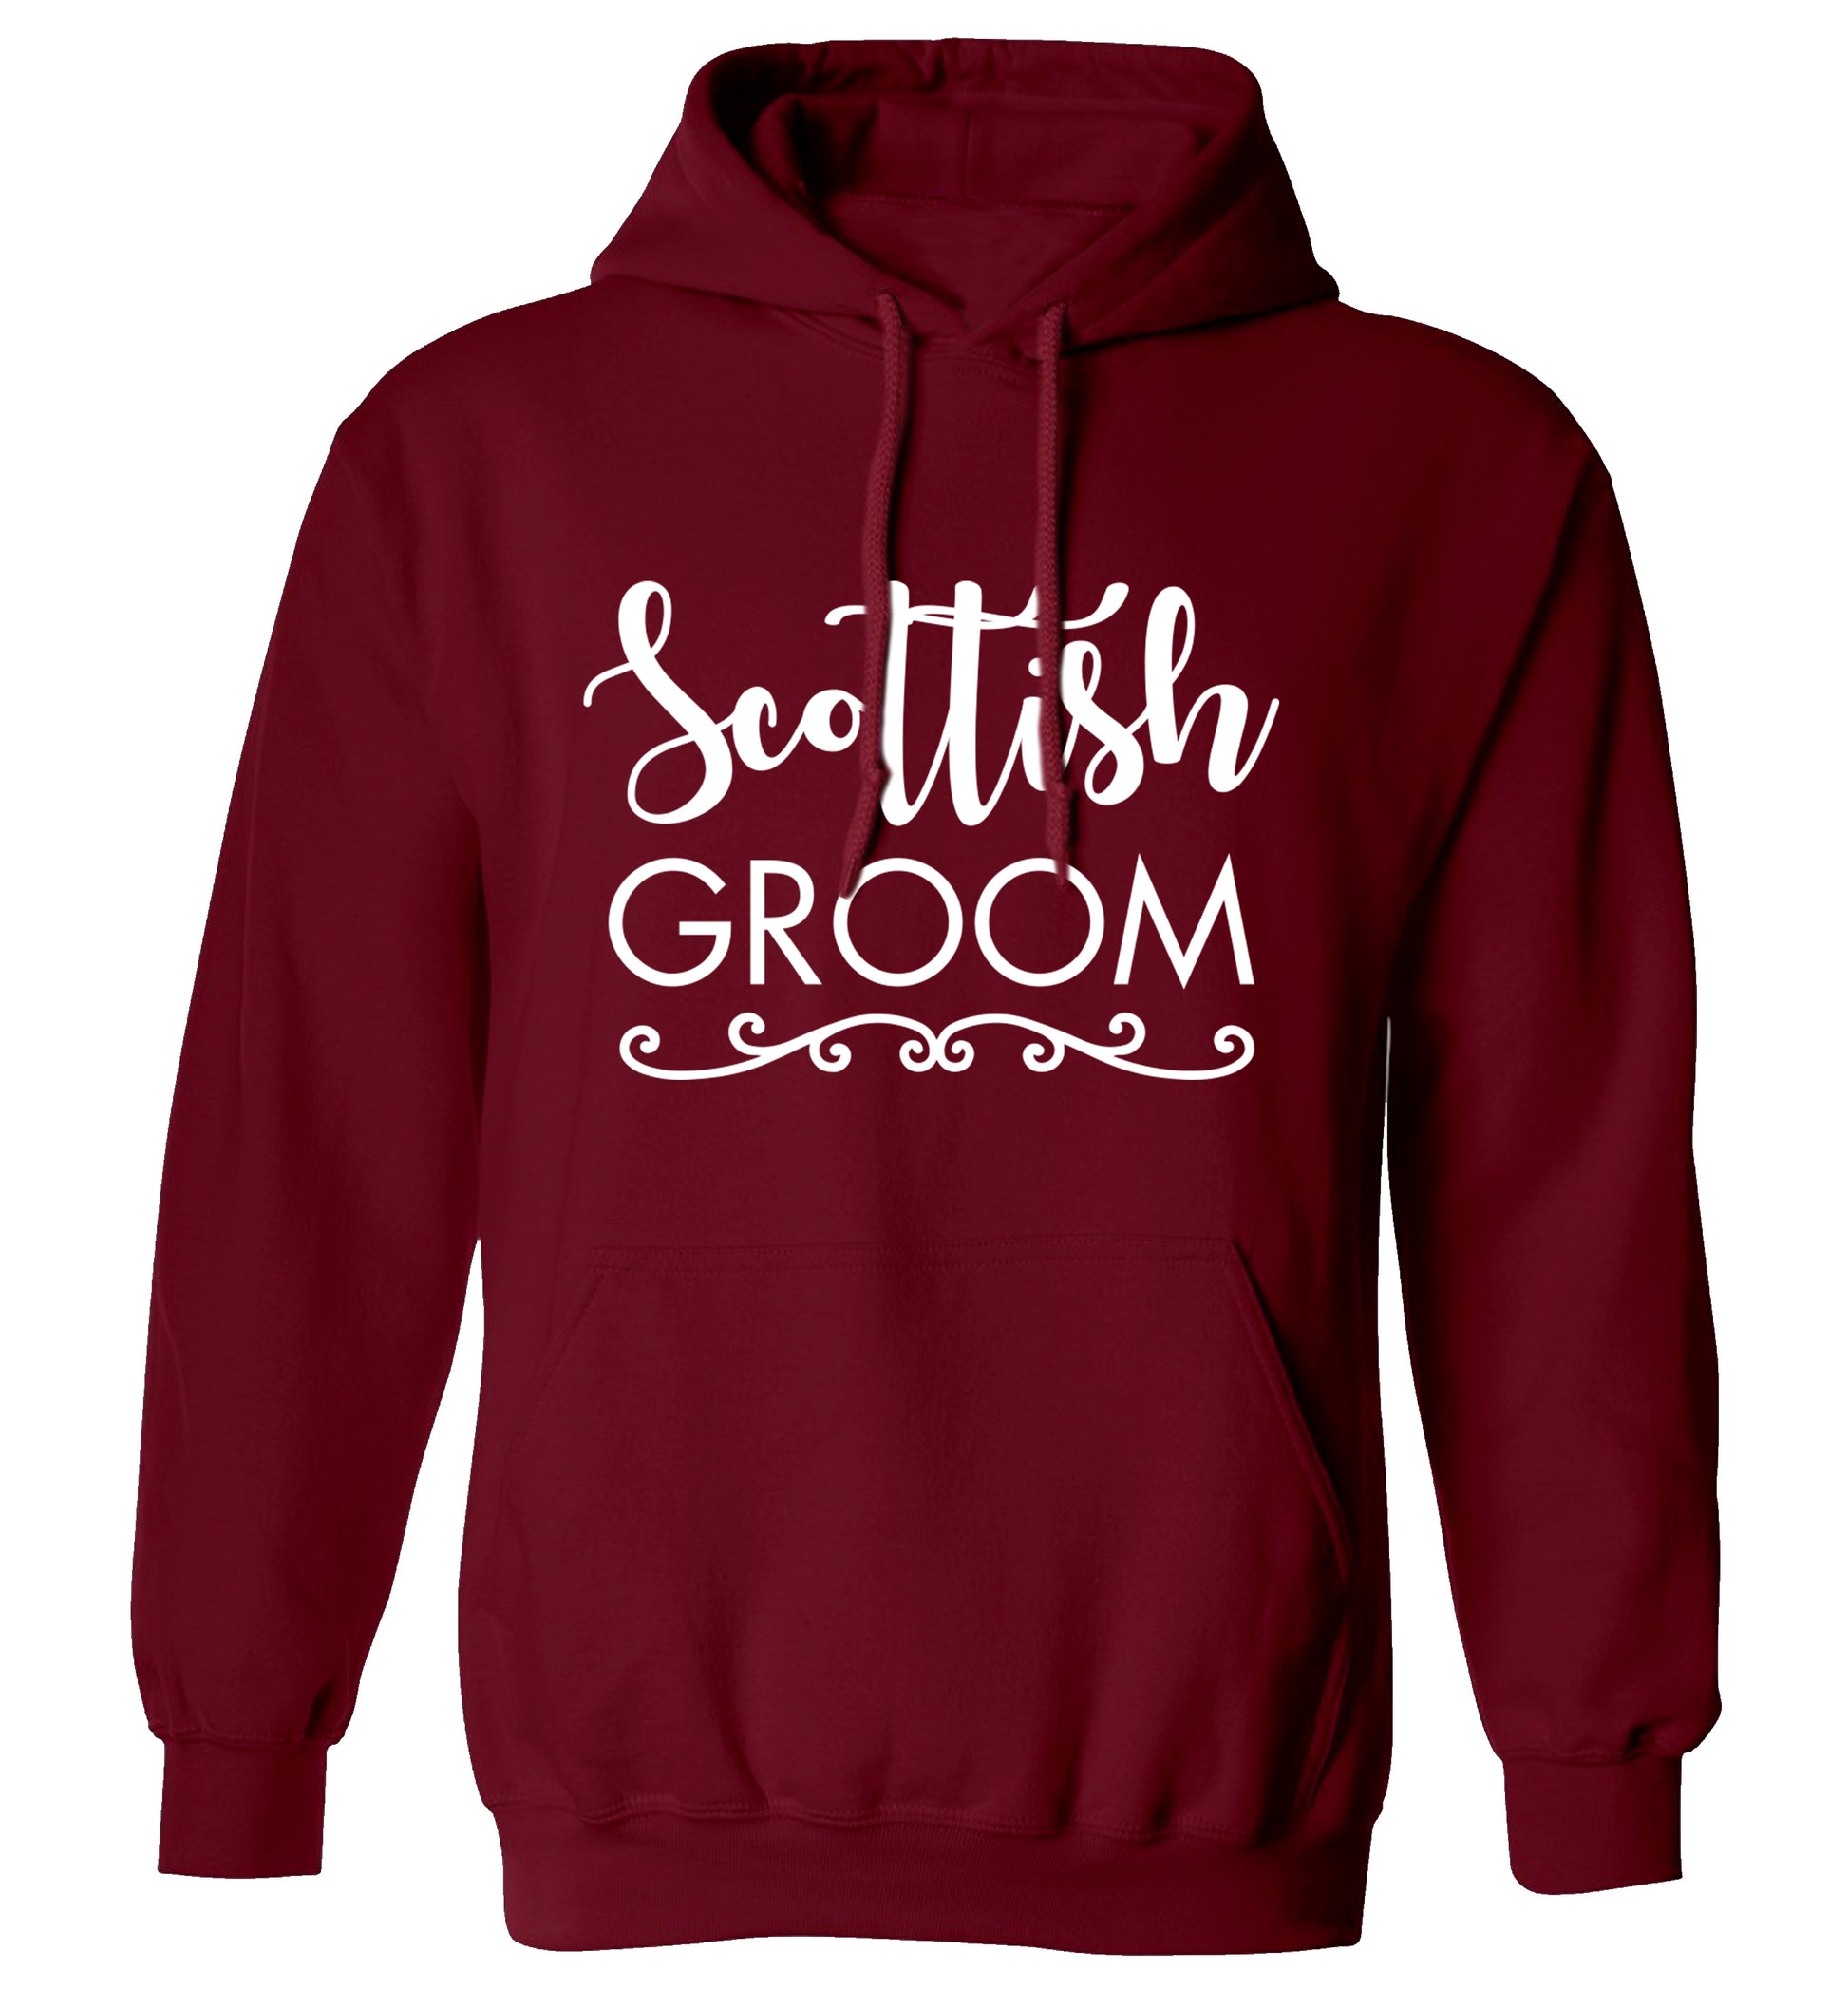 Scottish groom adults unisex maroon hoodie 2XL